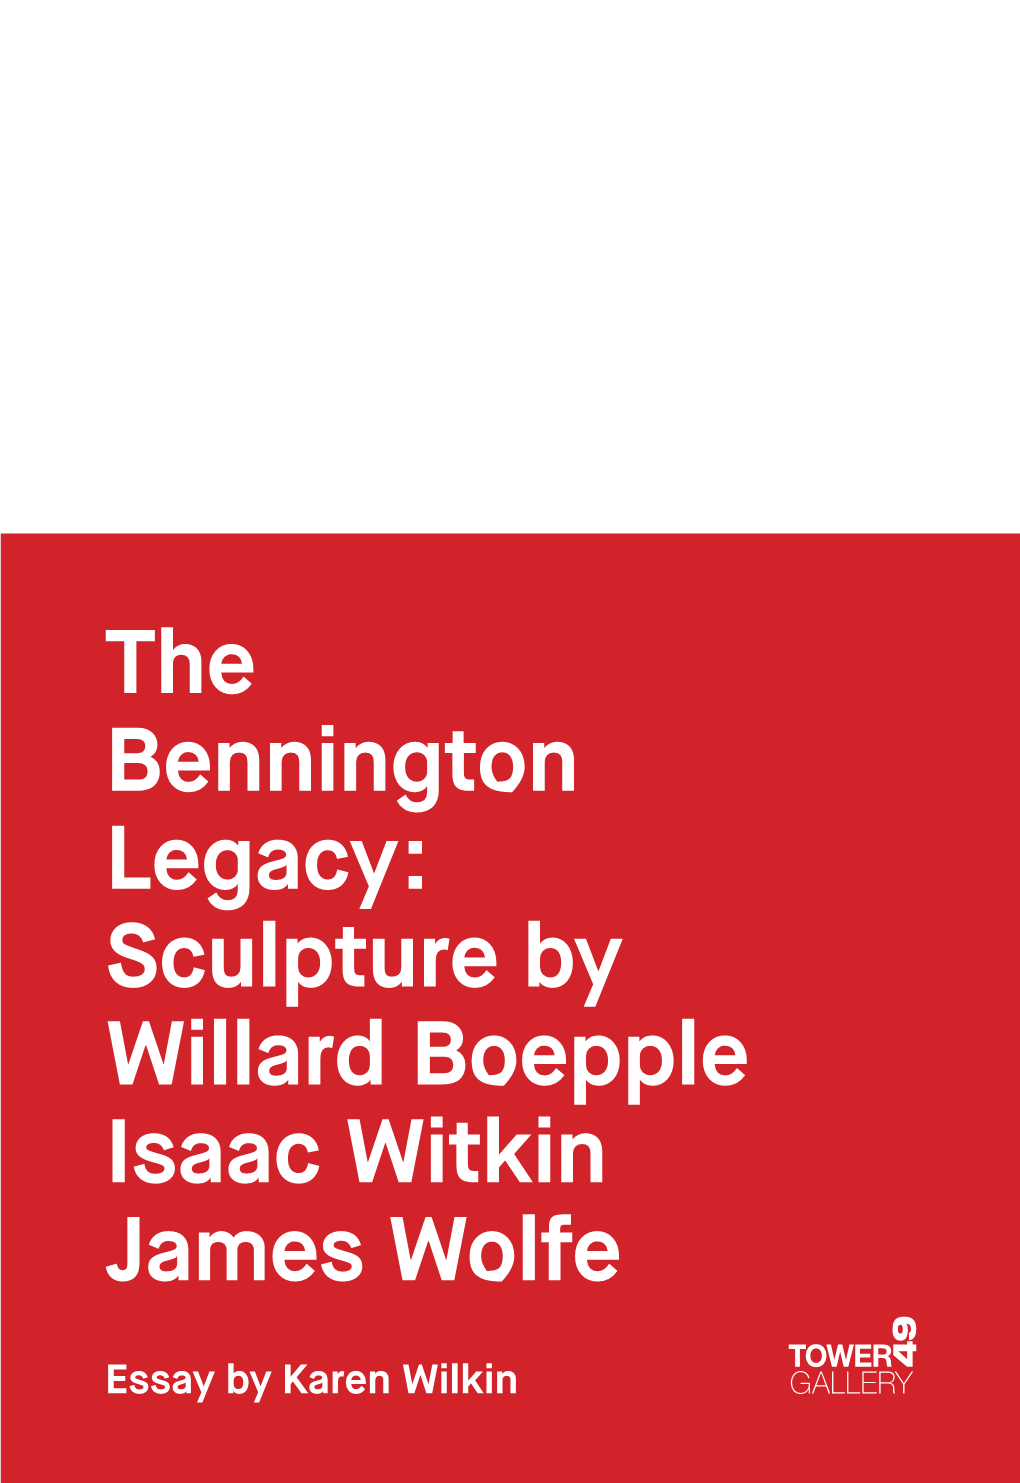 The Bennington Legacy: Sculpture by Willard Boepple Isaac Witkin James Wolfe